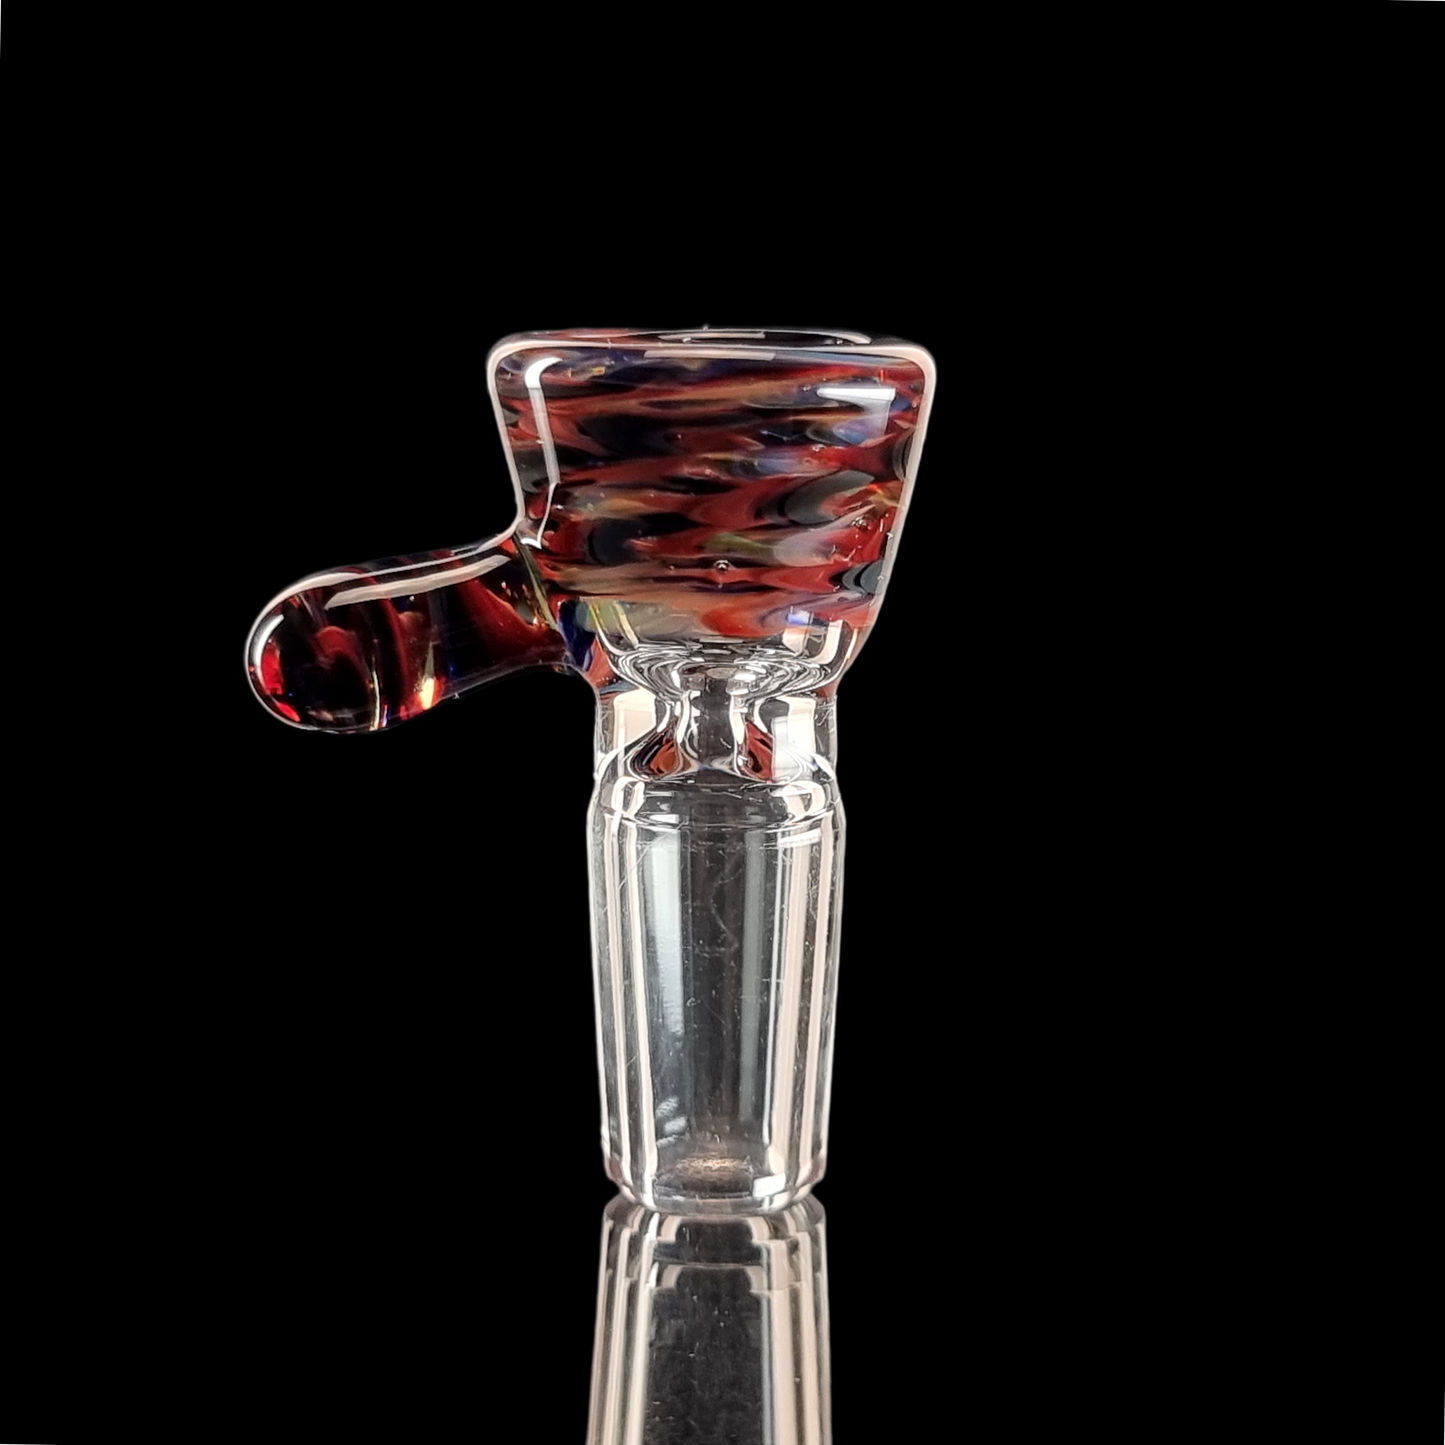 Twisty Glass Bowls 14mm by Chameleon Glass